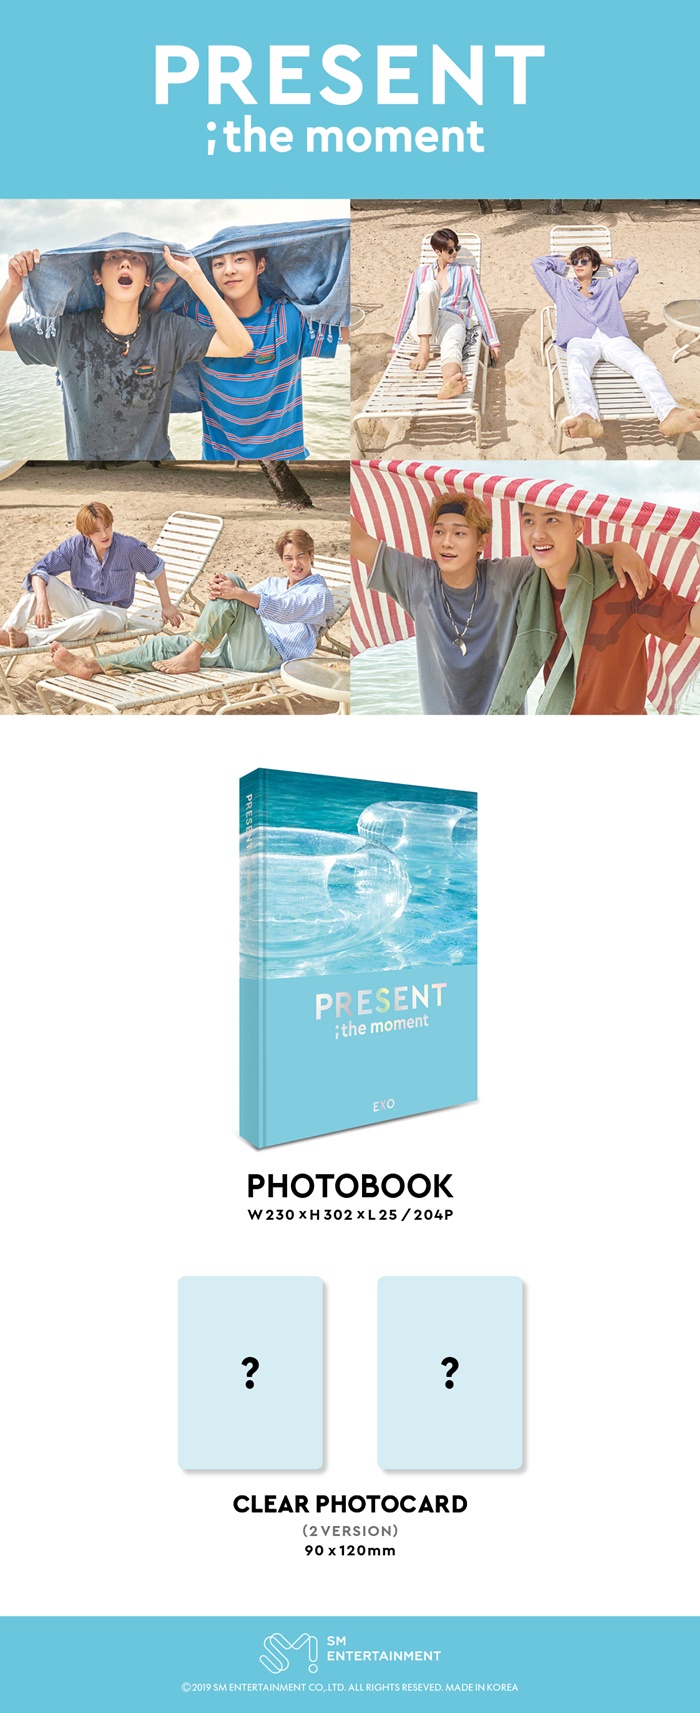 Photobook EXO - Present:The moment